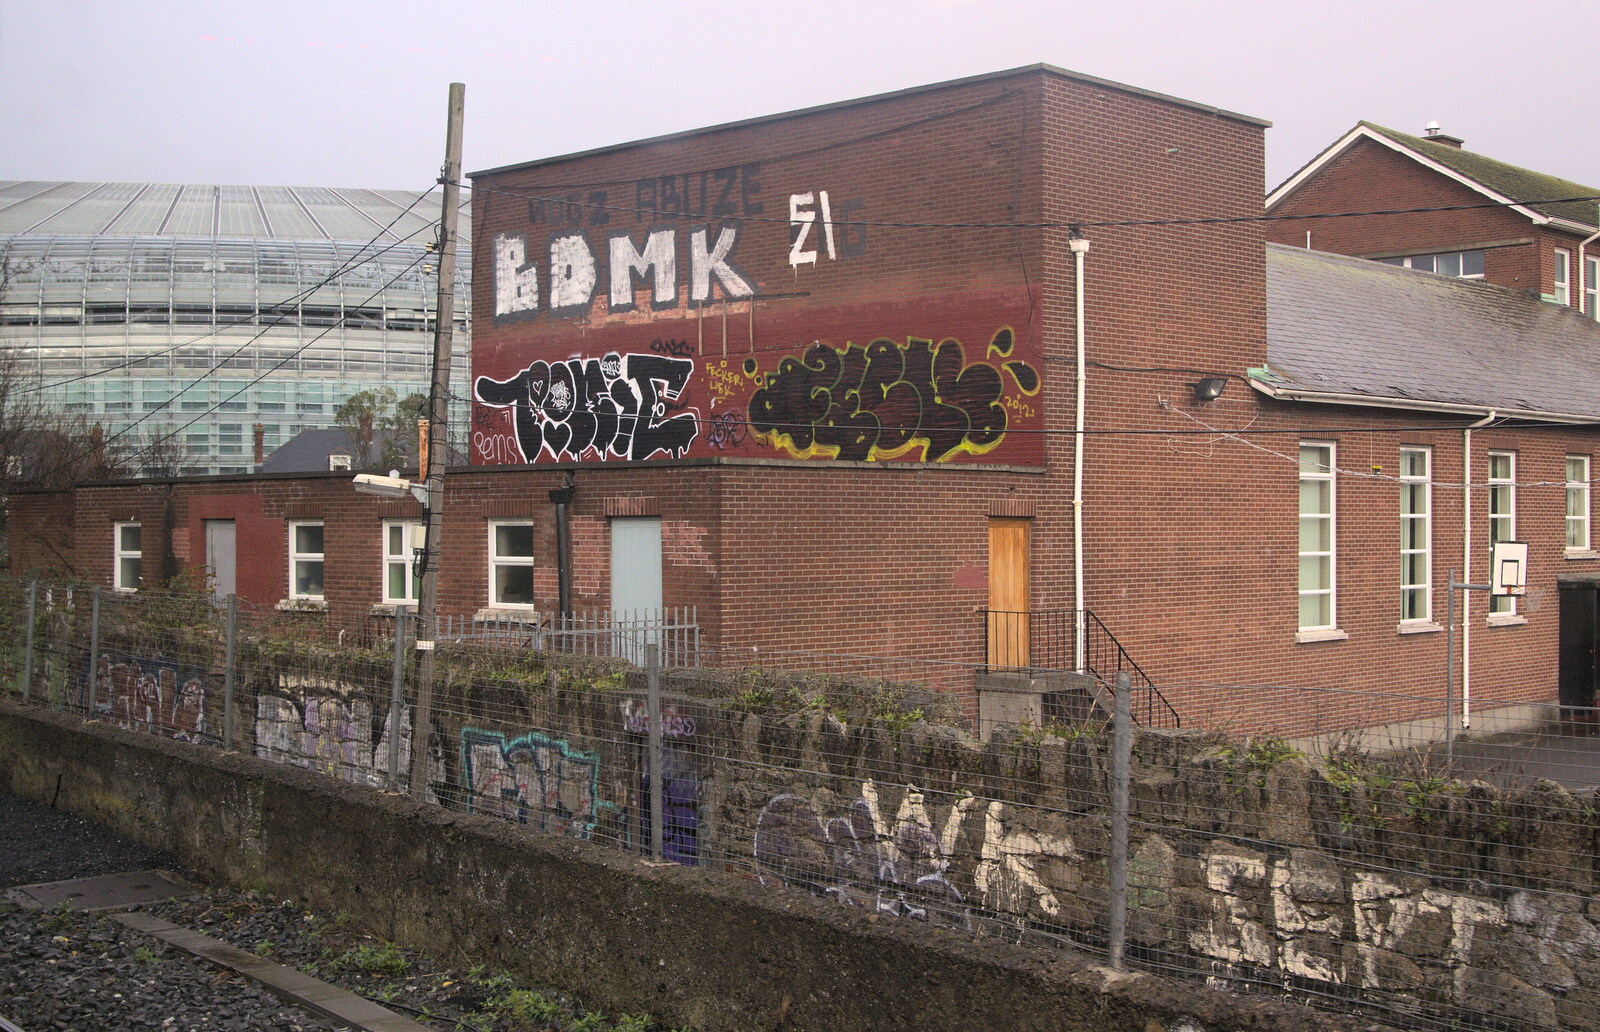 A graffiti'd building near Landsdowne Road from Christmas Eve in Dublin and Blackrock, Ireland - 24th December 2015